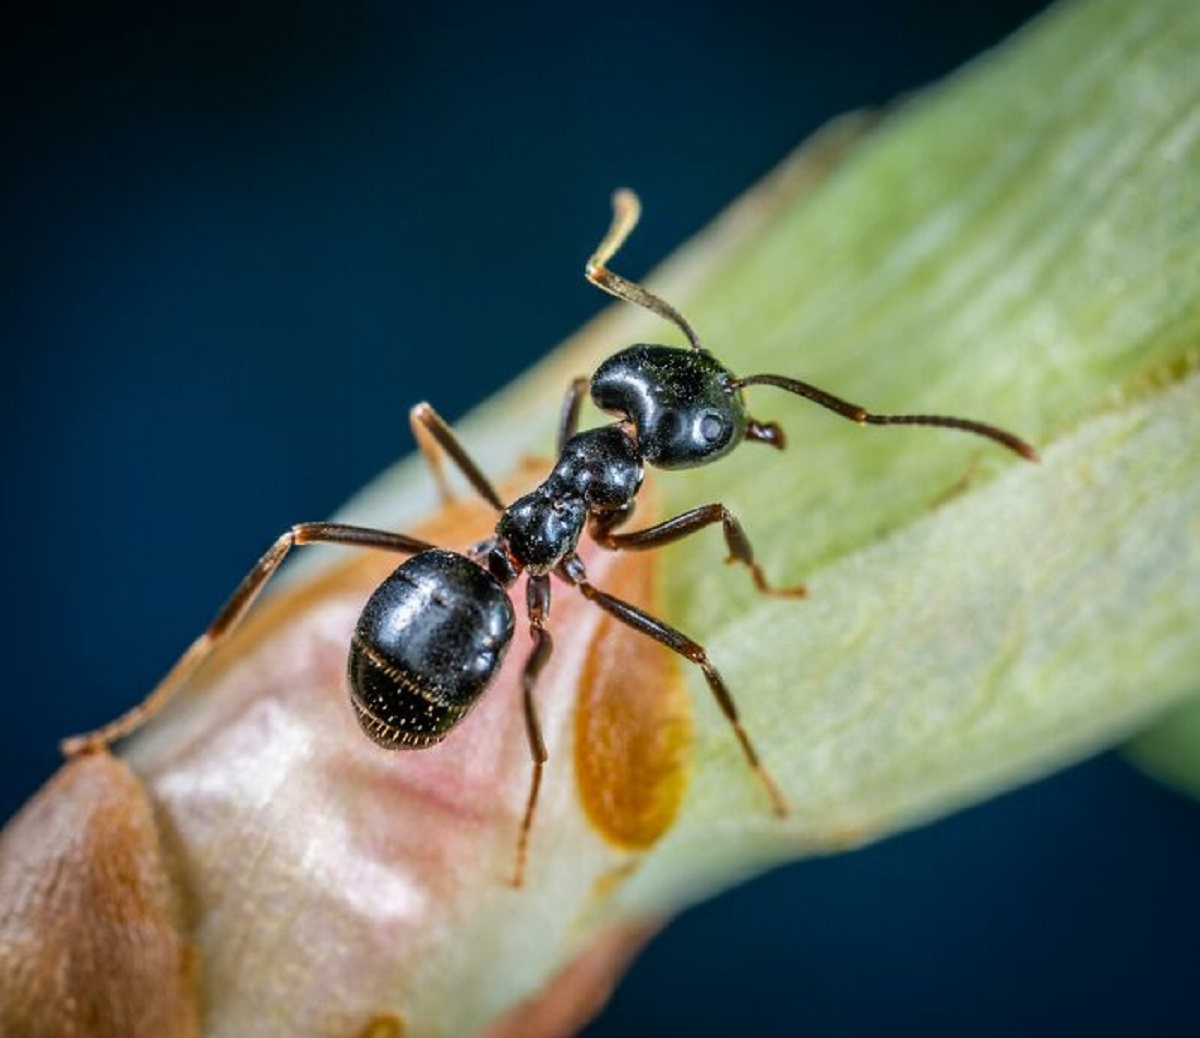 Ants can’t take fall damage because their terminal velocity isn’t fast enough to break their exoskeleton.